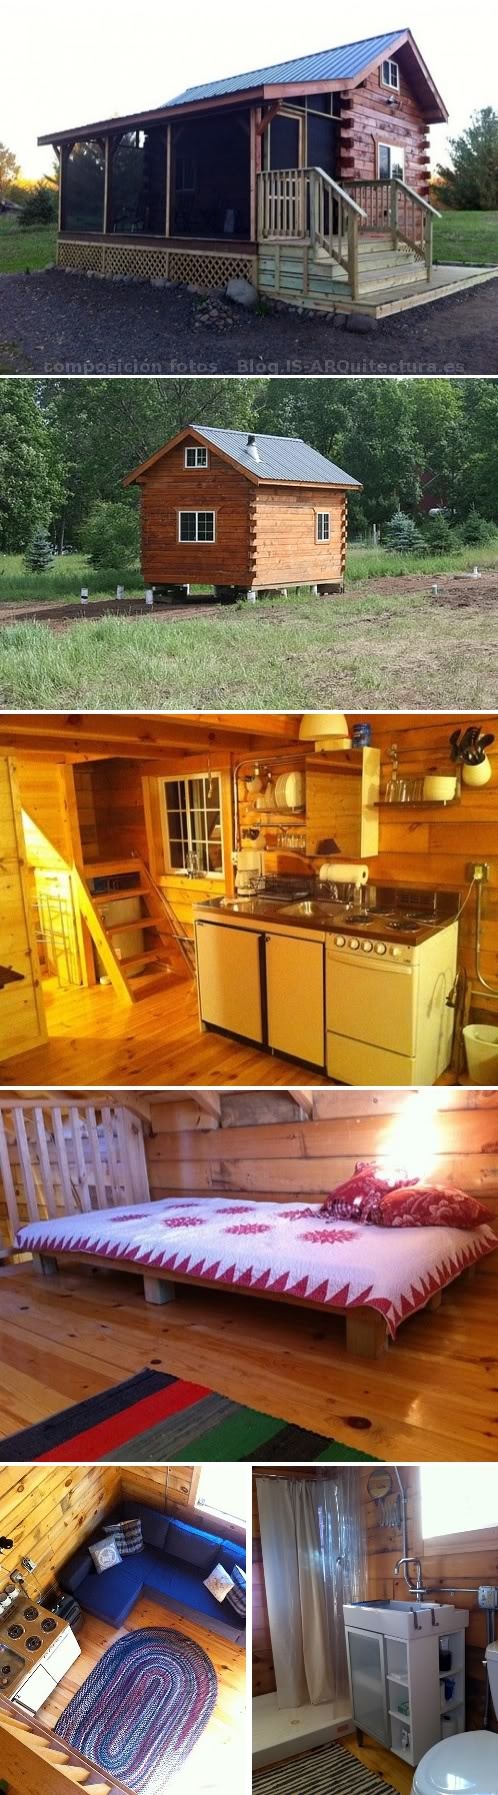 tiny-log-cabin-on-a-budget